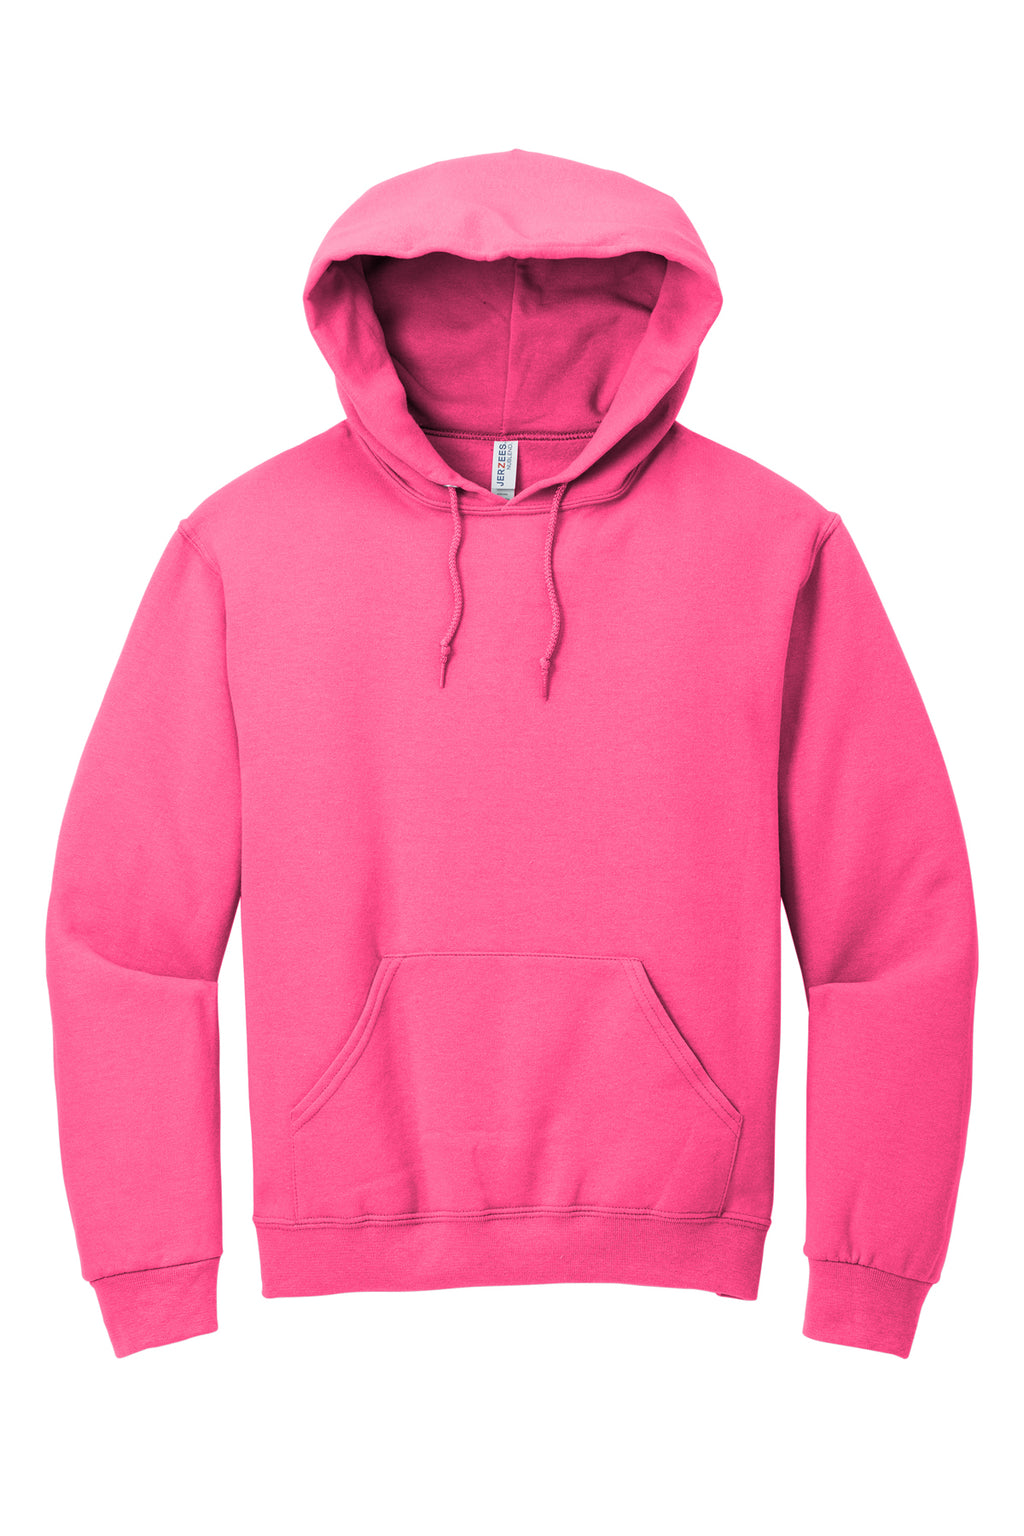 Jerzees Mens/Unisex Hoodies Neon Pink